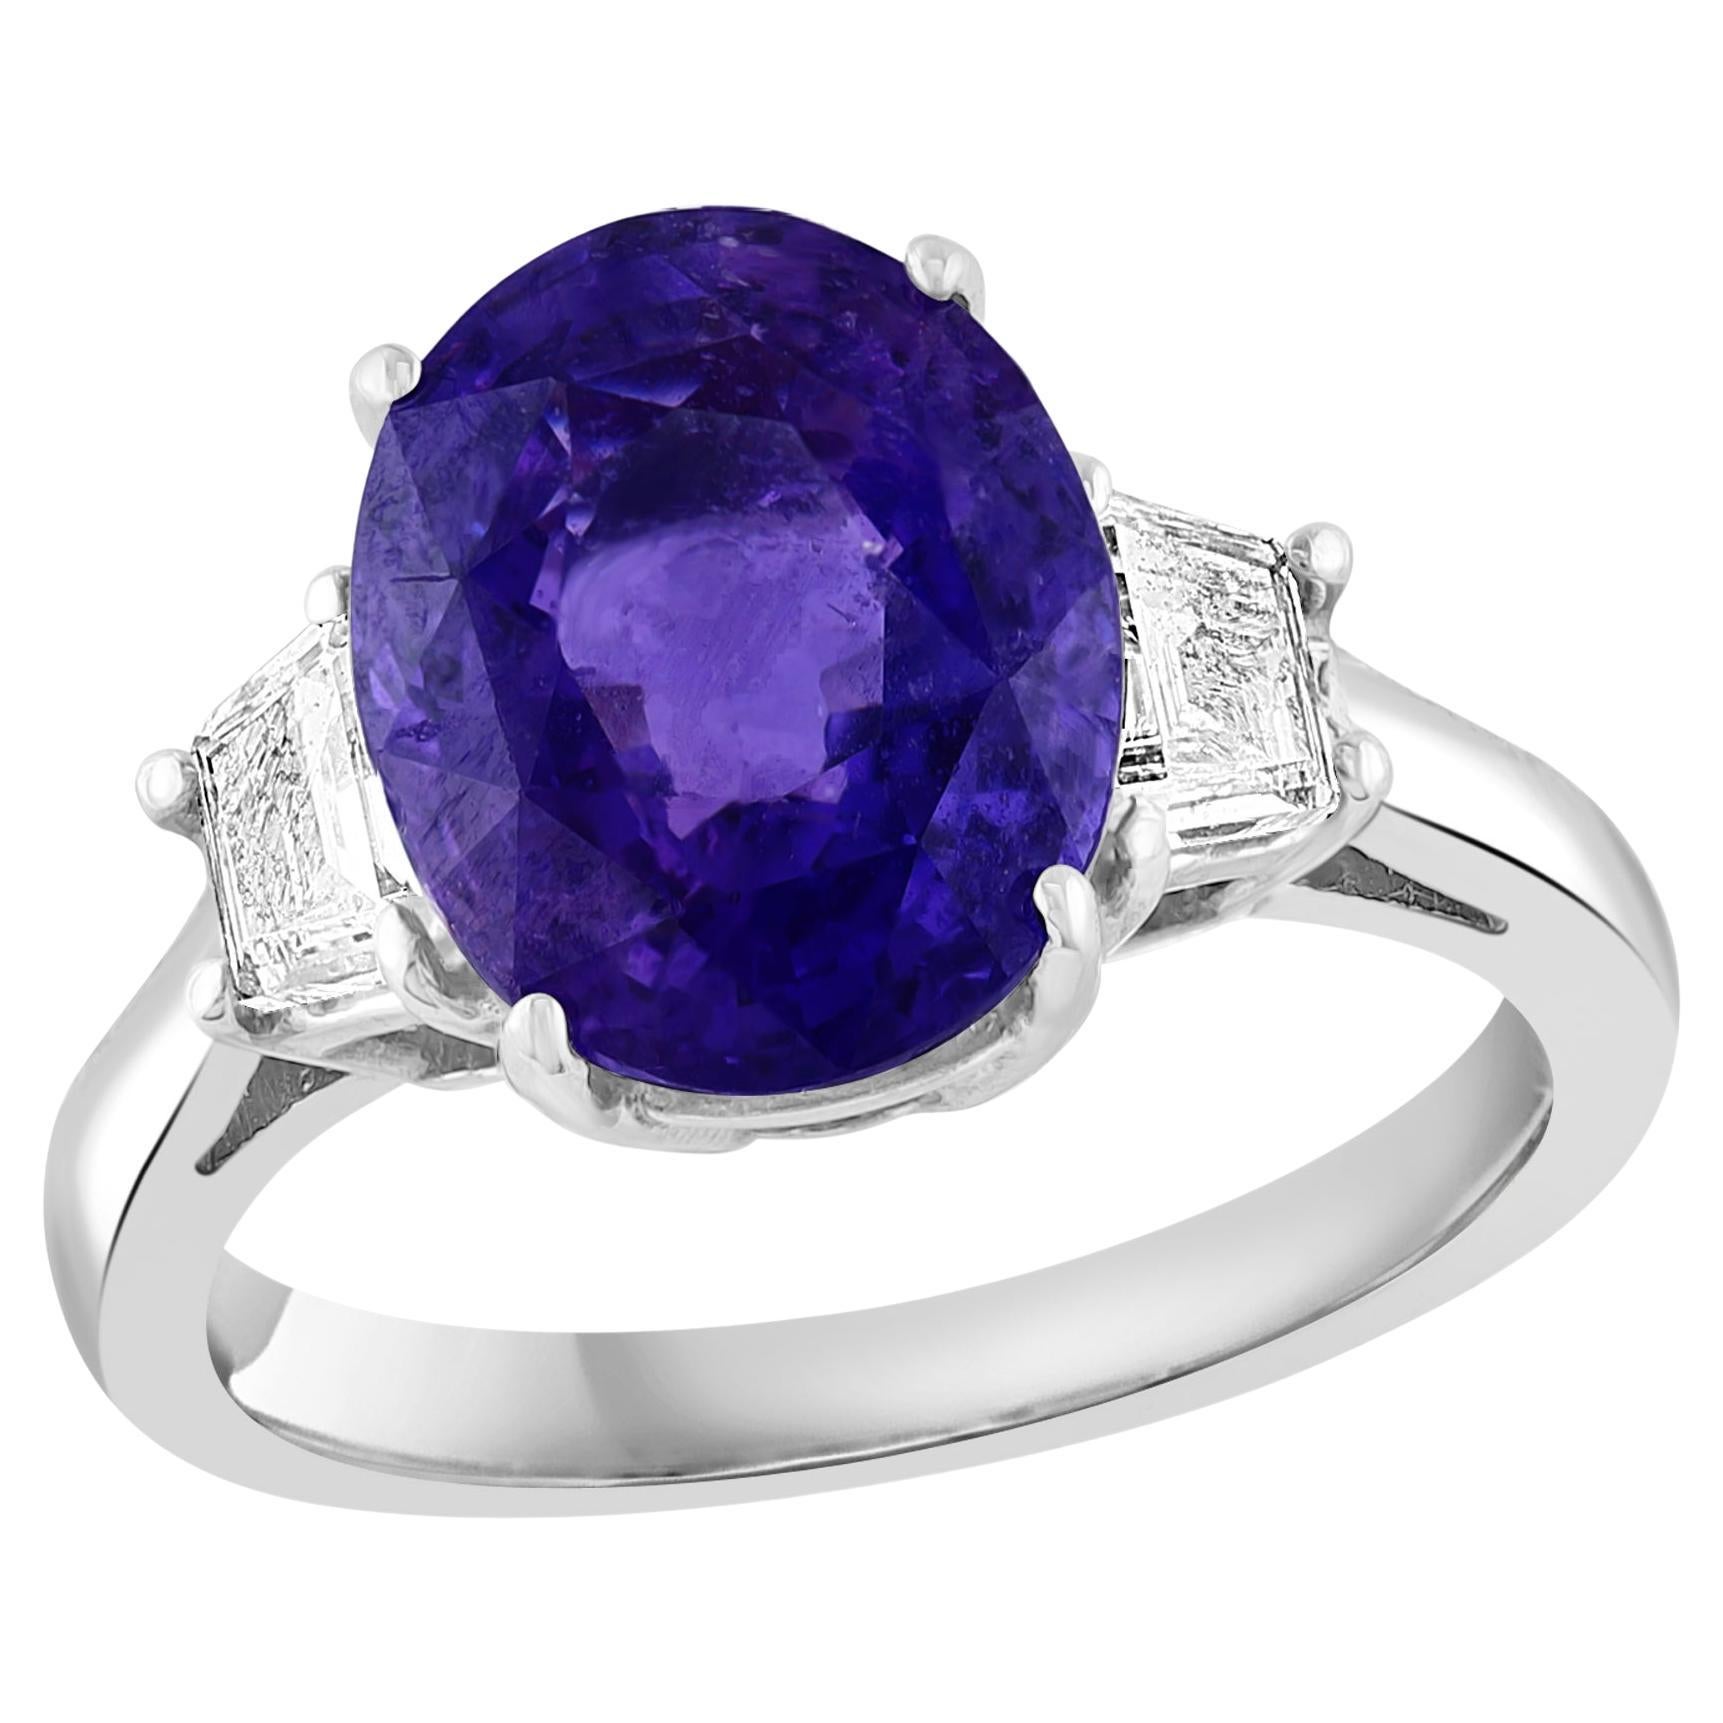 5.56 Carat Oval Cut Purple Sapphire Diamond 3-Stone Engagement Ring in Platinum For Sale